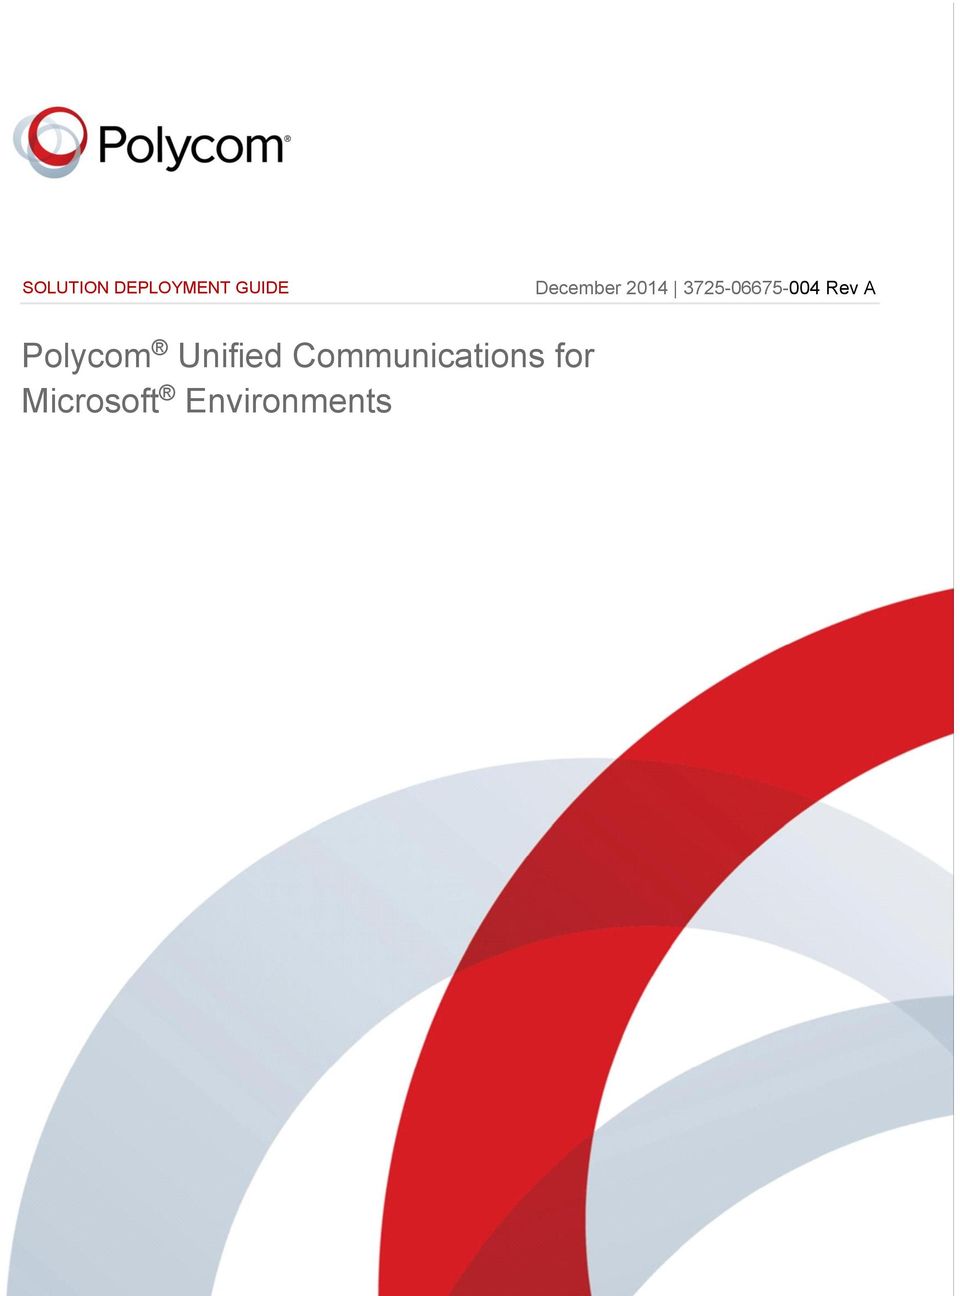 A Polycom Unified Communications